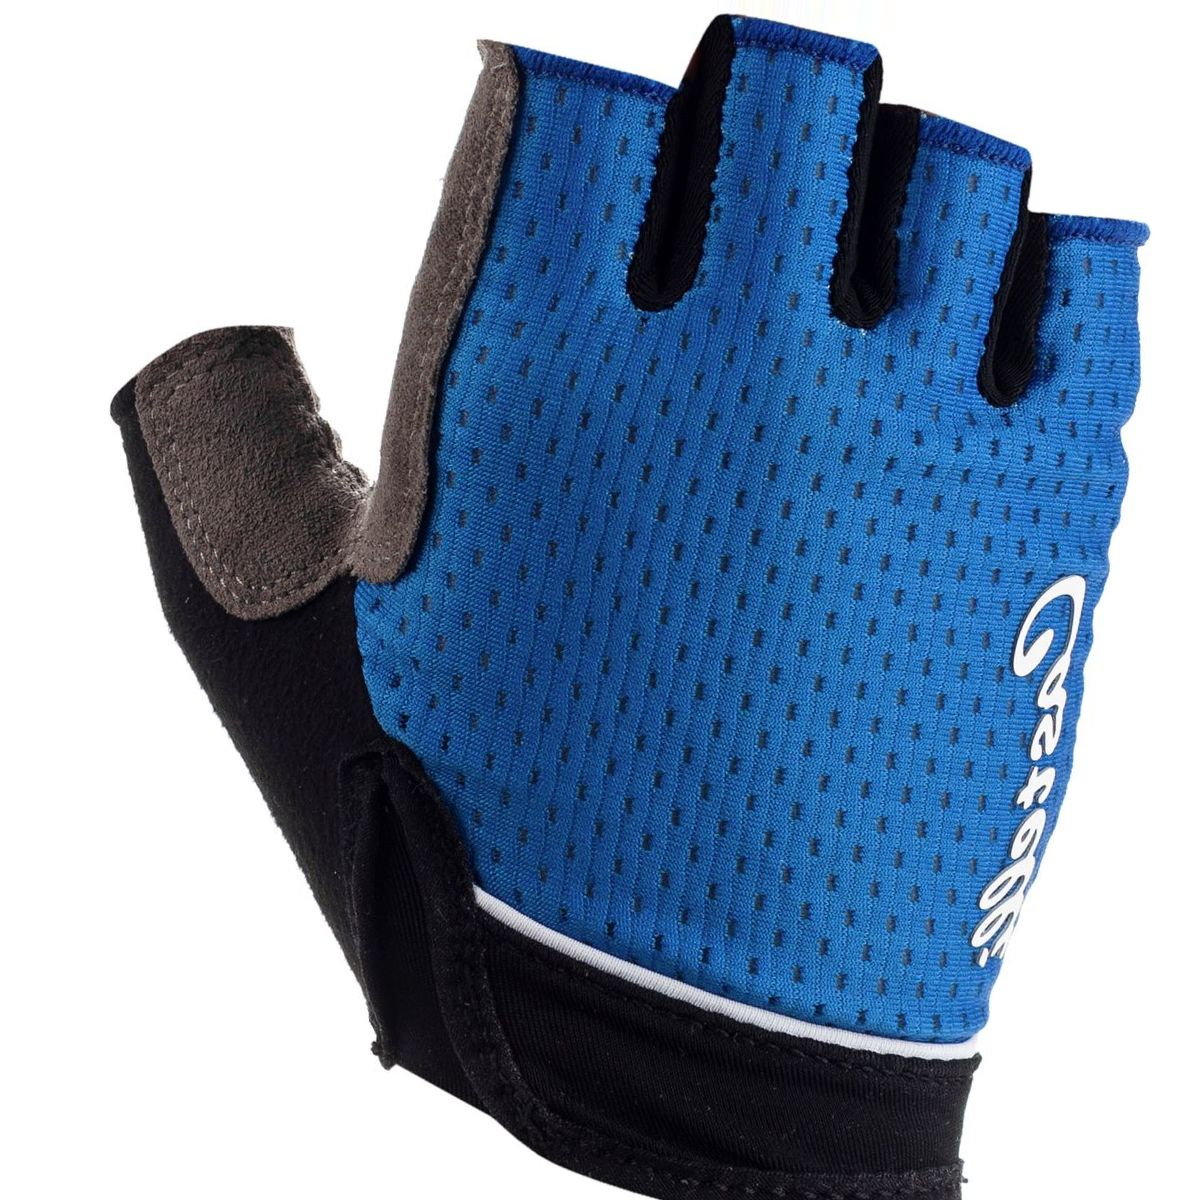 Castelli Roubaix Gel Glove - Women's